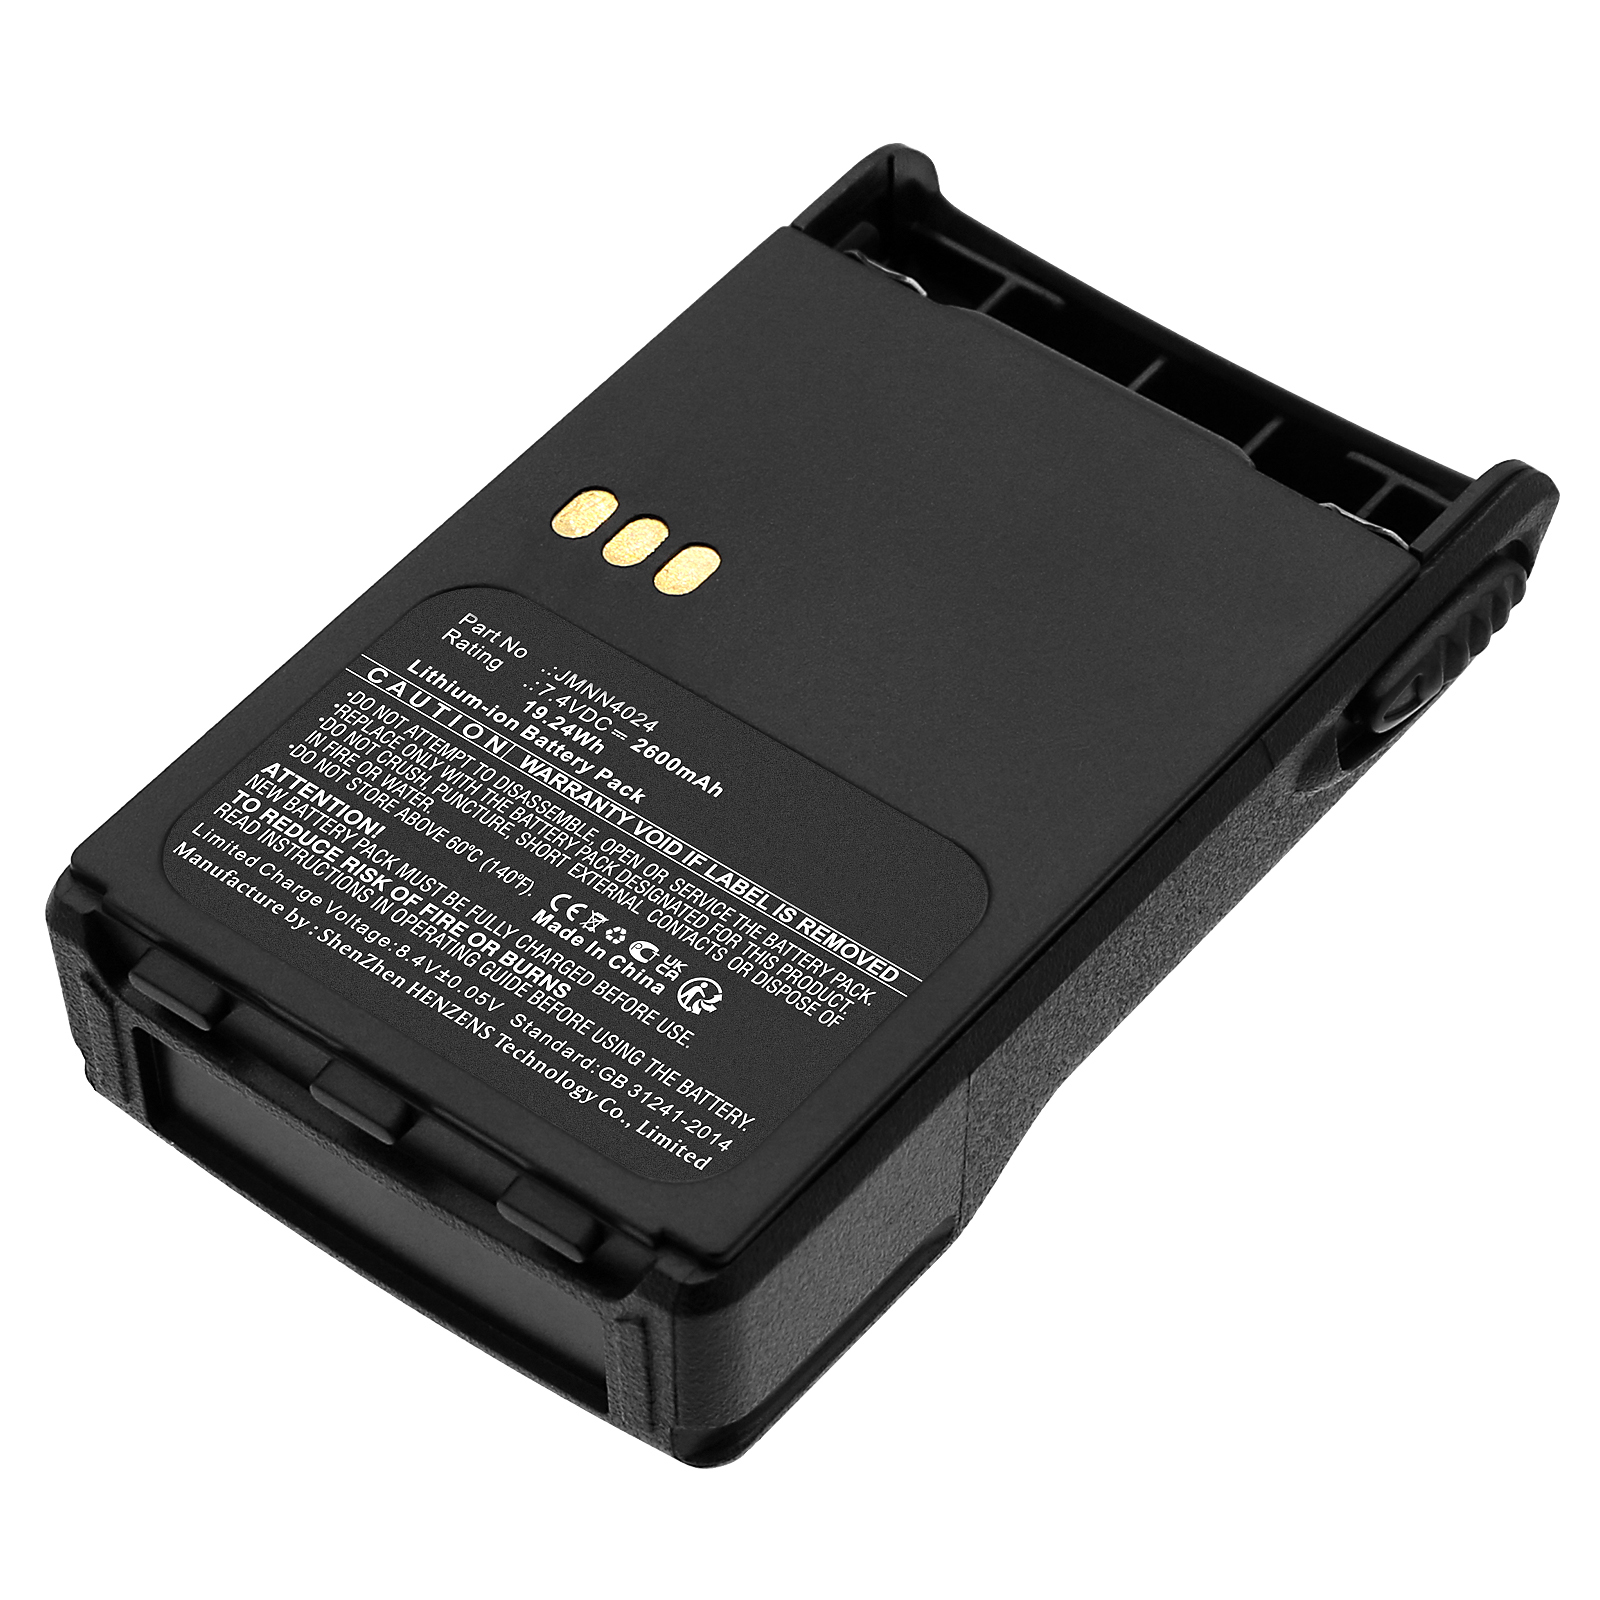 Synergy Digital 2-Way Radio Battery, Compatible with Motorola JMNN4023 2-Way Radio Battery (Li-ion, 7.4V, 2600mAh)